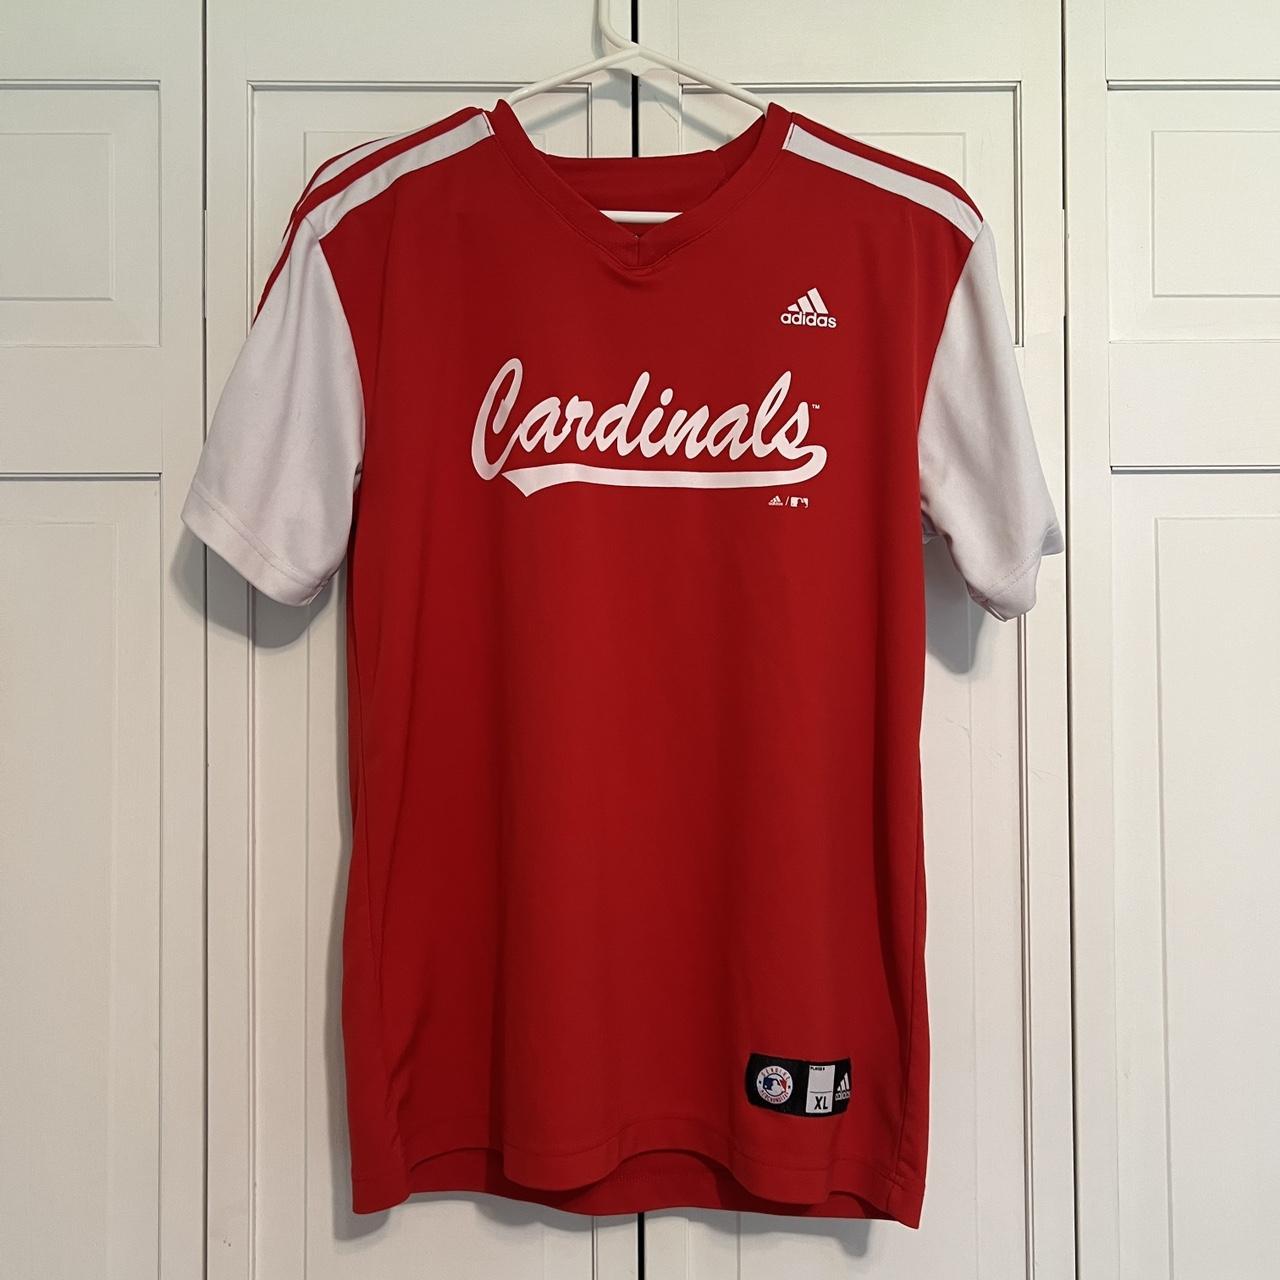 Red adidas St. Louis cardinals baseball jersey, Kids